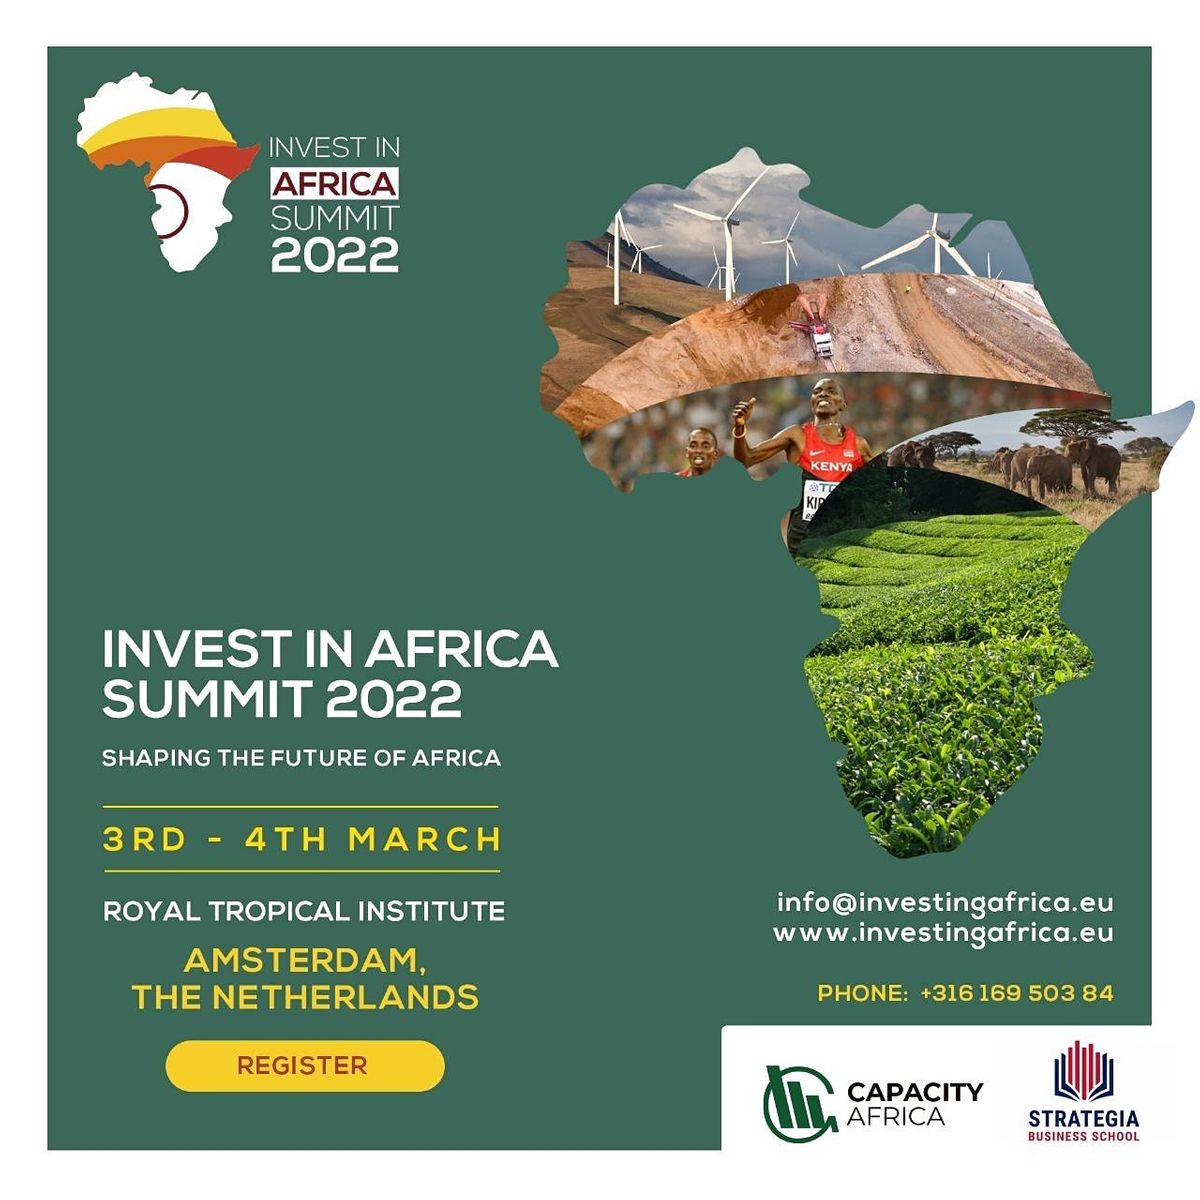 INVEST IN AFRICA SUMMIT 2022